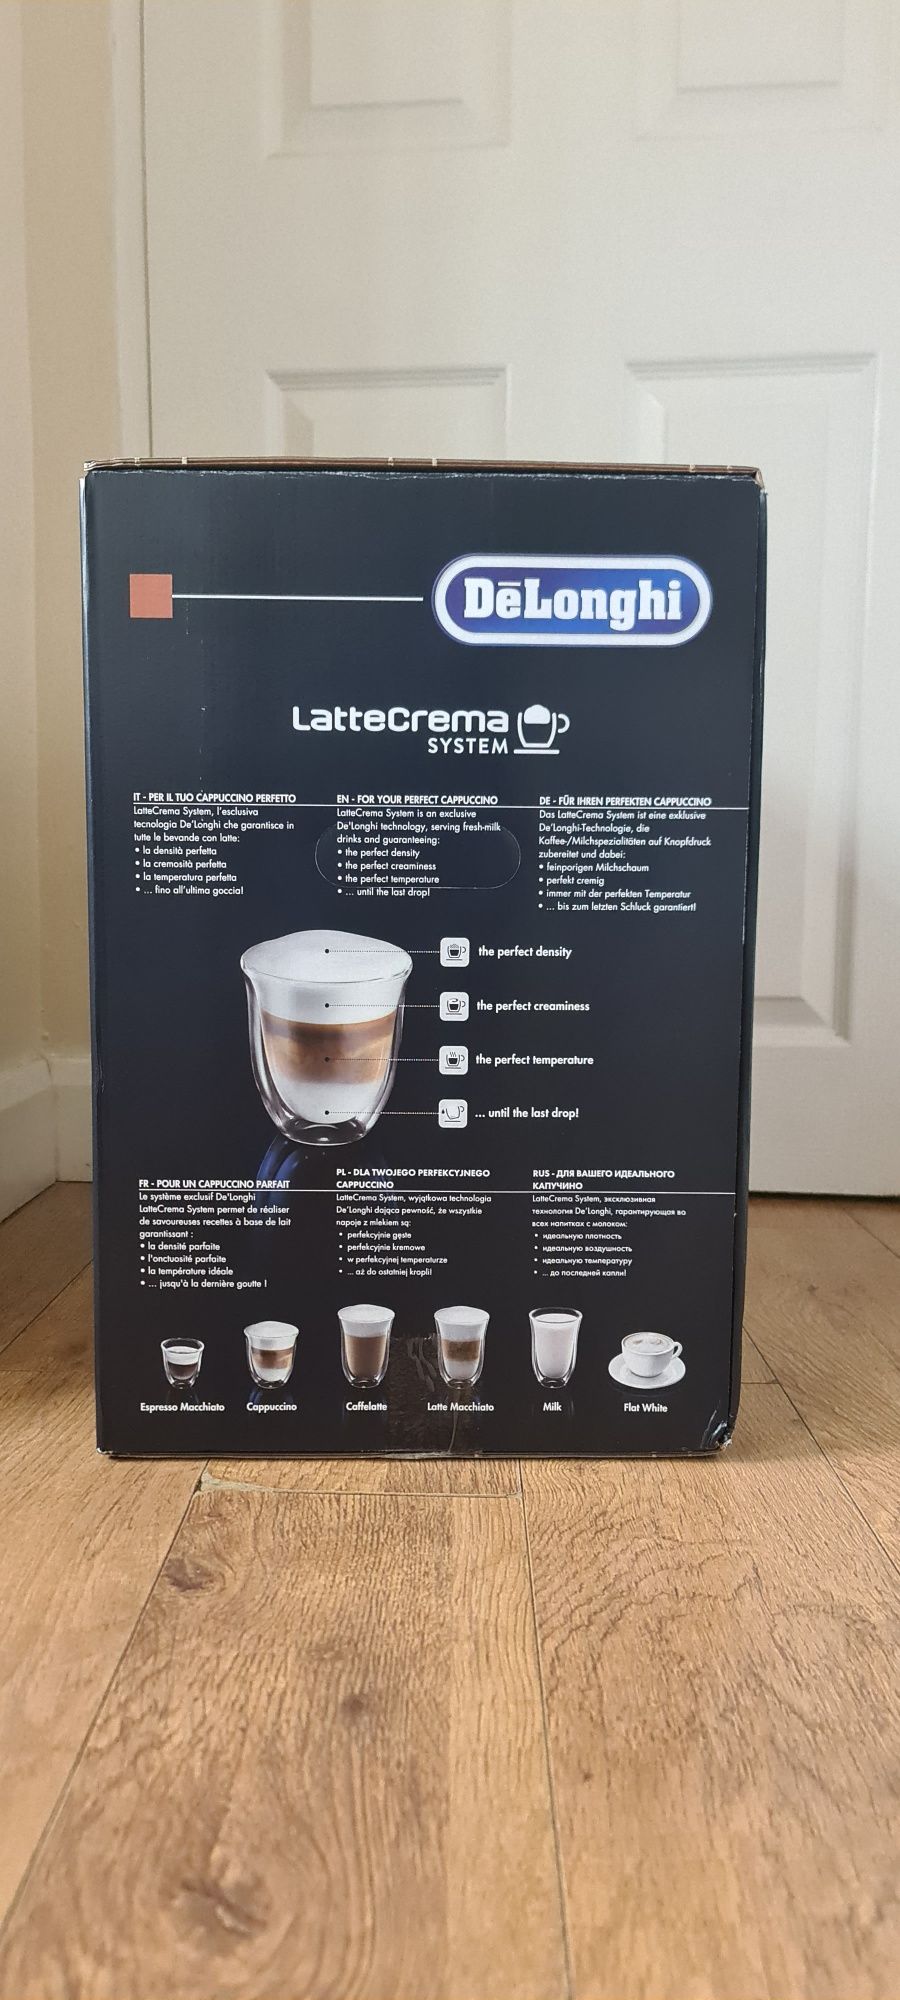 De'Longhi Eletta, Fully Automatic Bean to Cup Coffee Machine, Cappucci